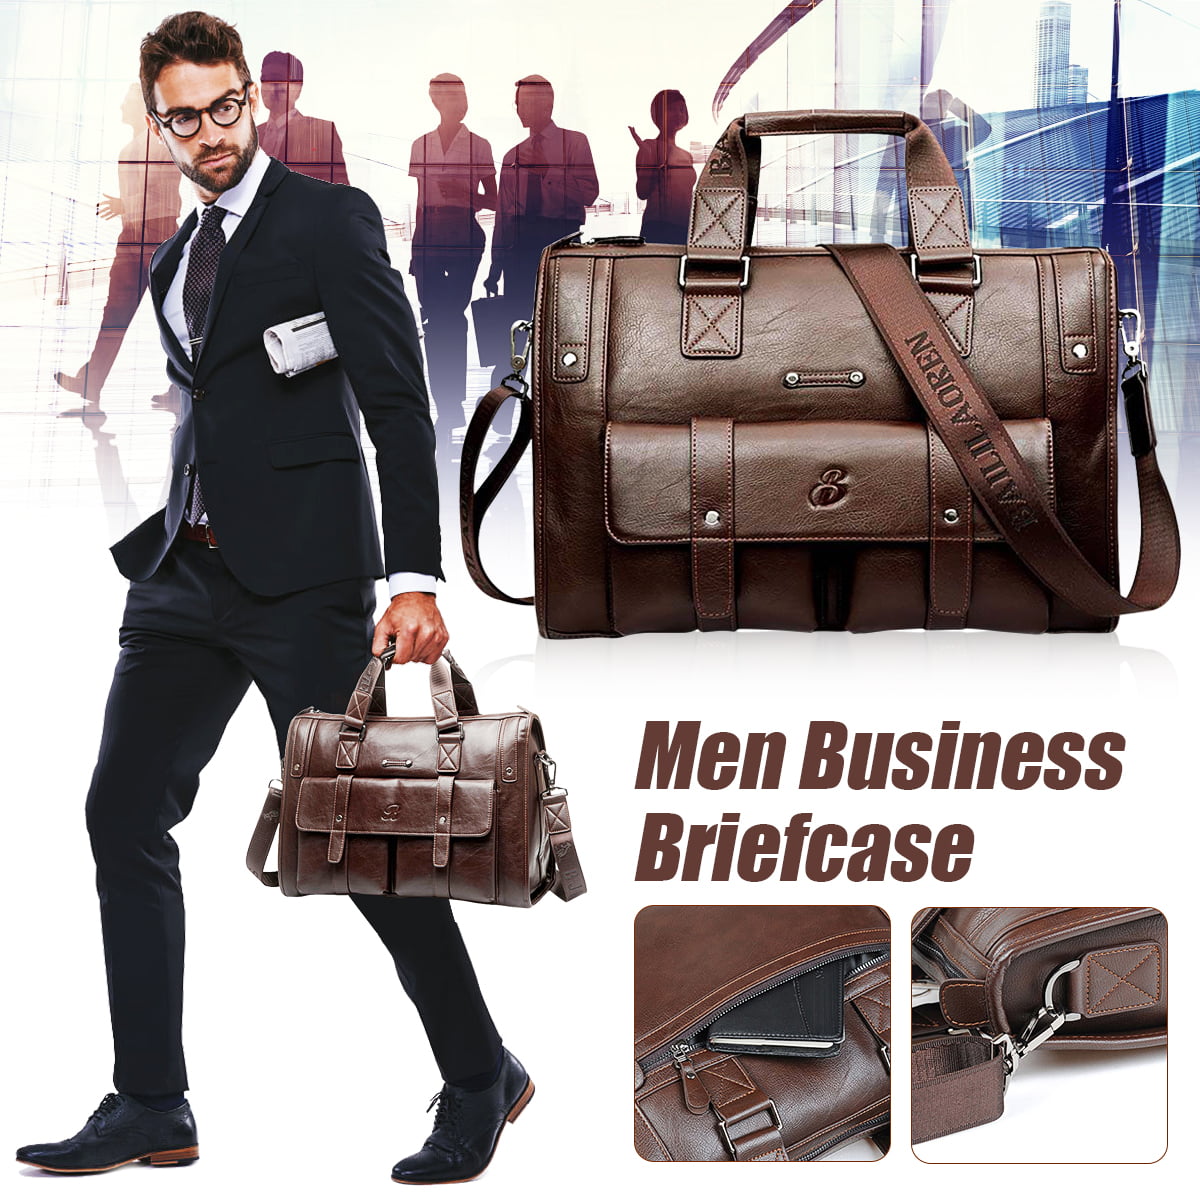 Leather men's briefcase large capacity 15.6-inch laptop business travel bag black